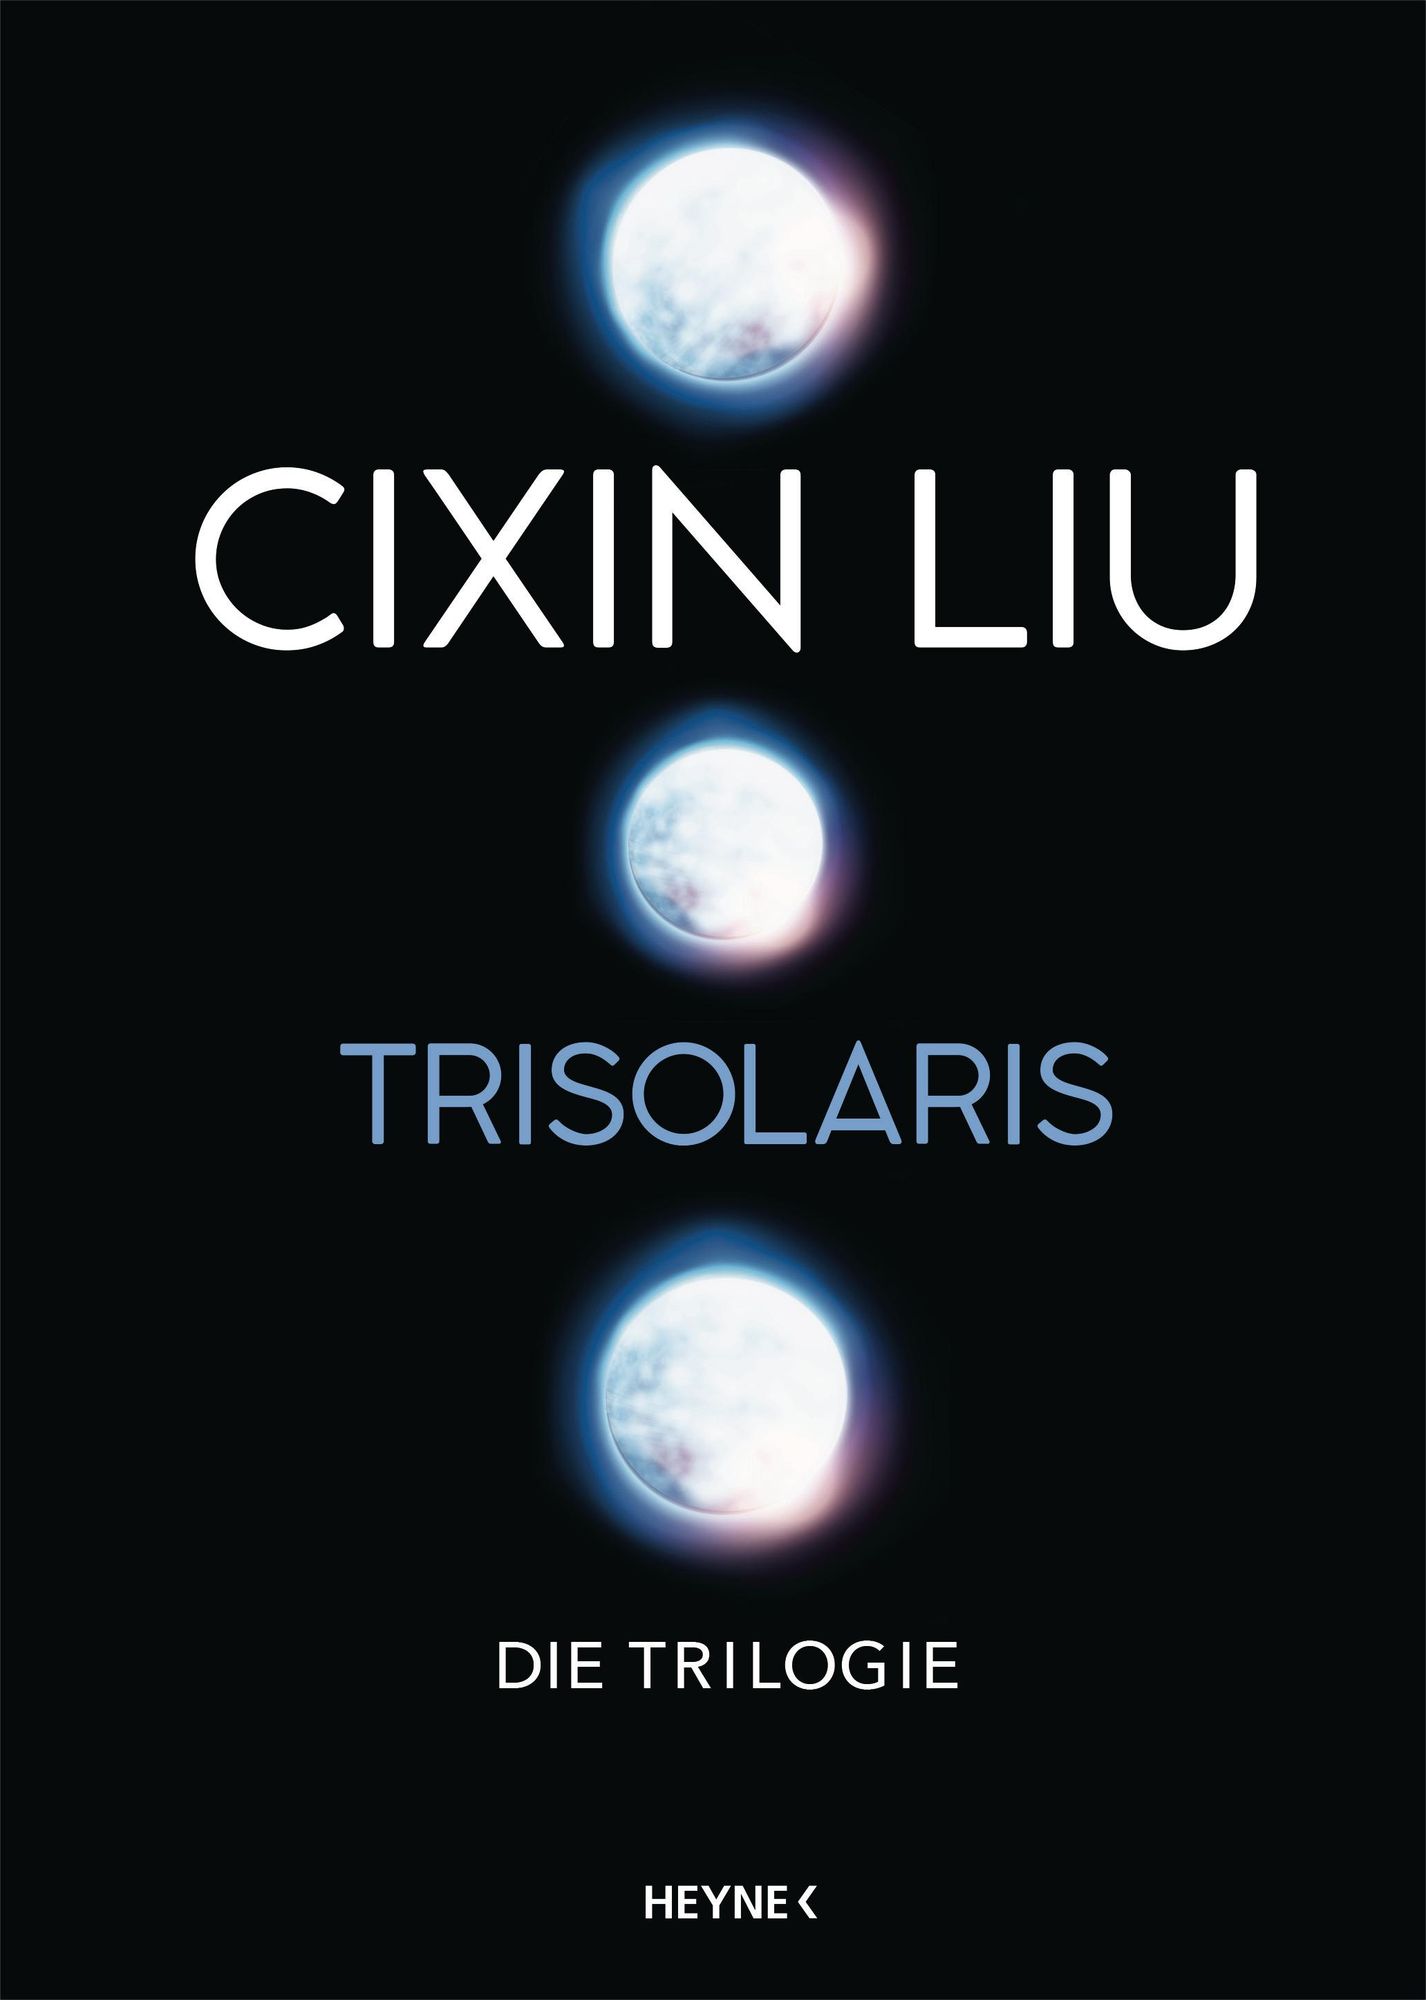 trisolaris-die-trilogie-epub-cixin-liu.jpeg